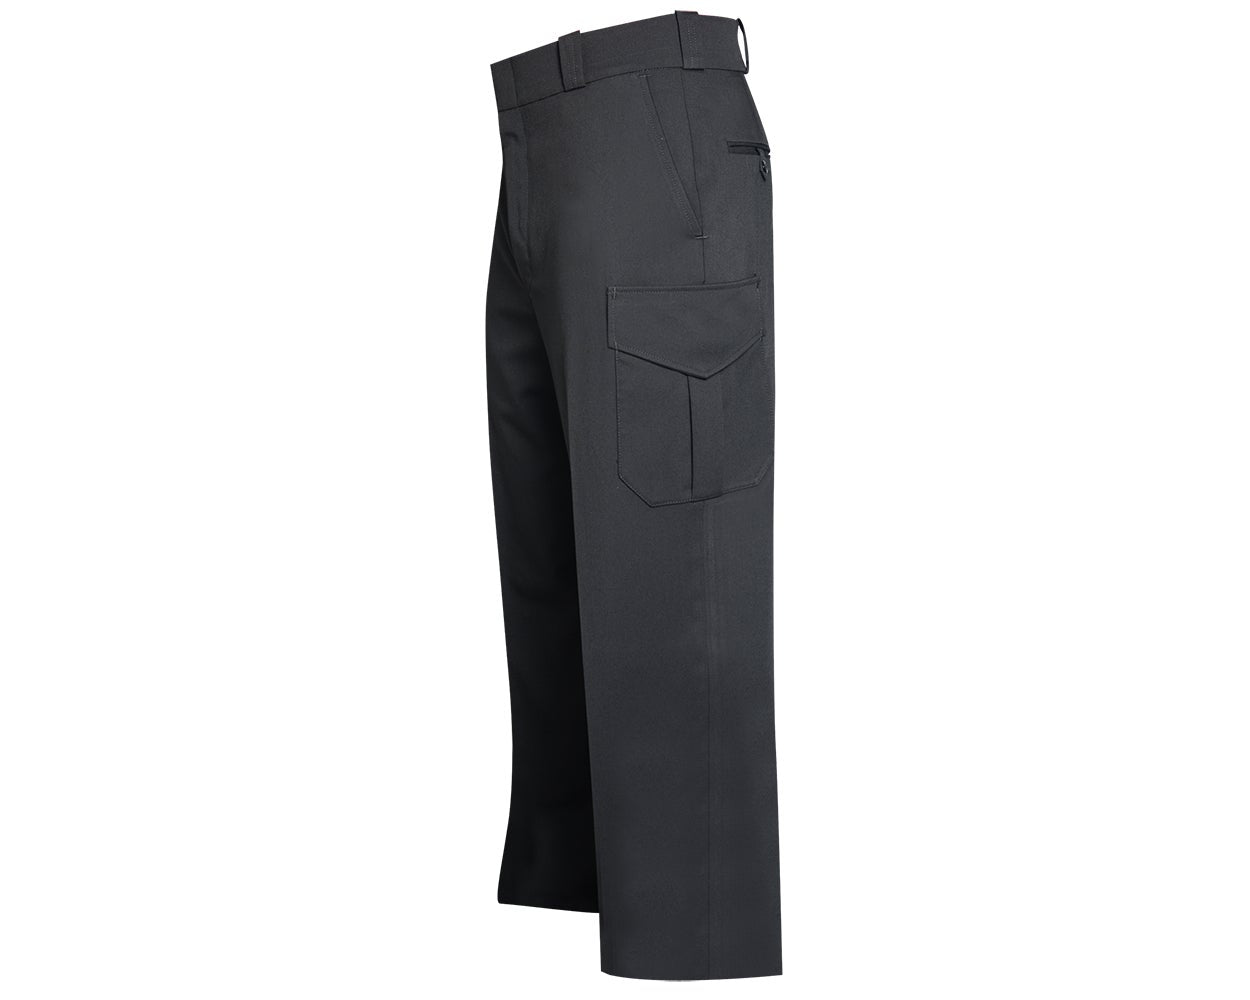 Flying Cross Men's Deluxe Tactical Pants with Cargo Pockets 39300